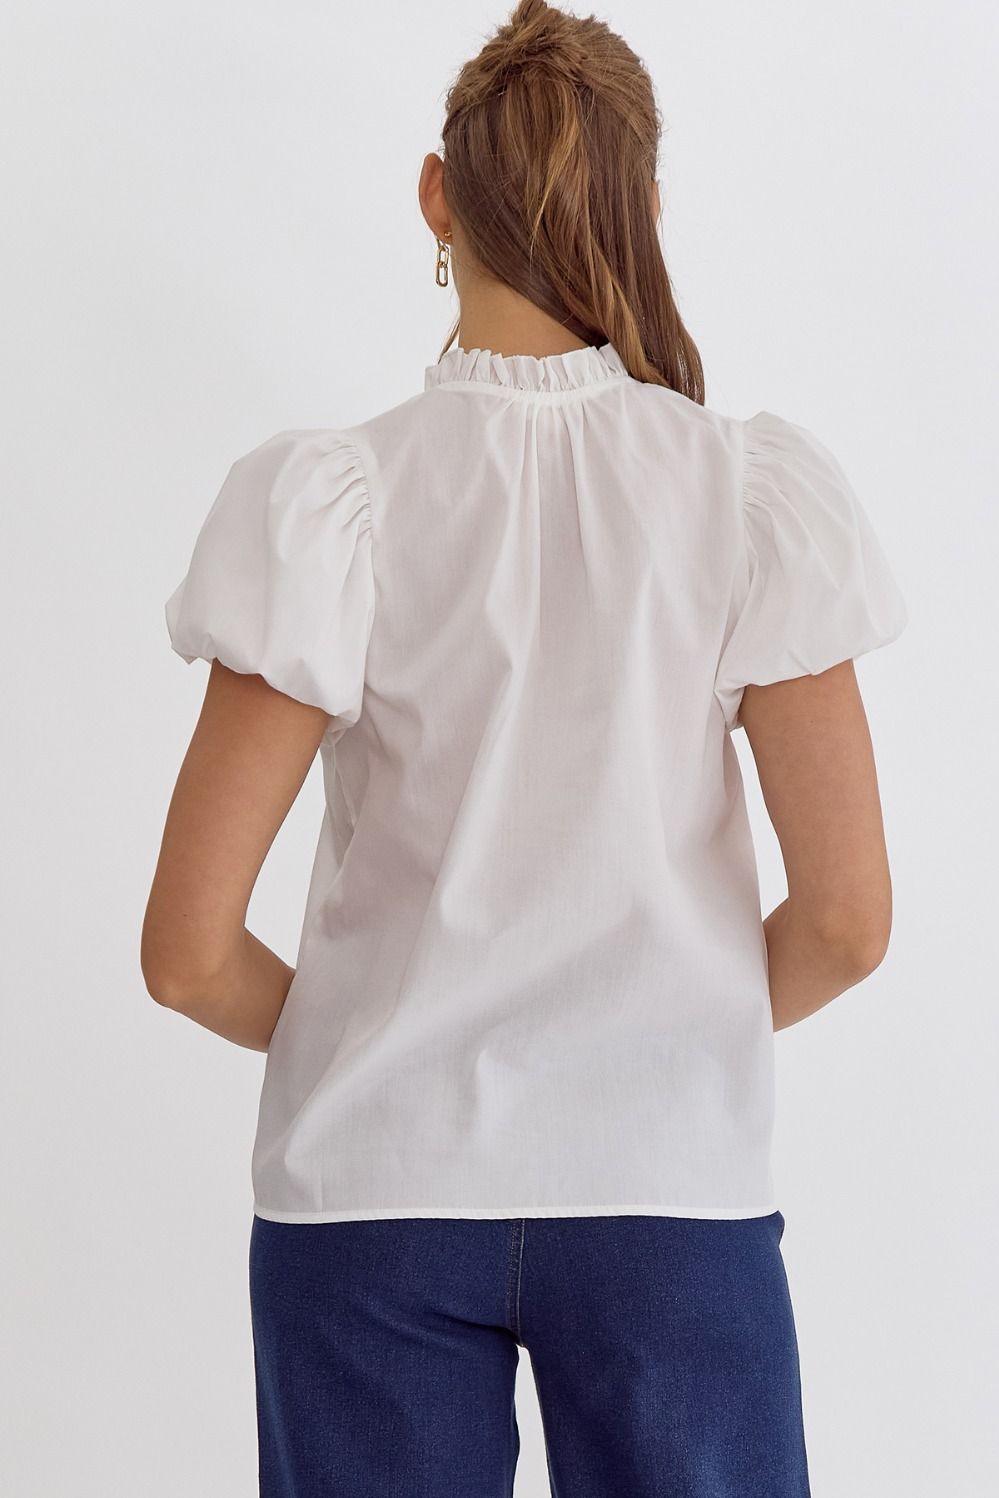 Entro | White V-Neck Short Sleeve Top | Sweetest Stitch Boutique